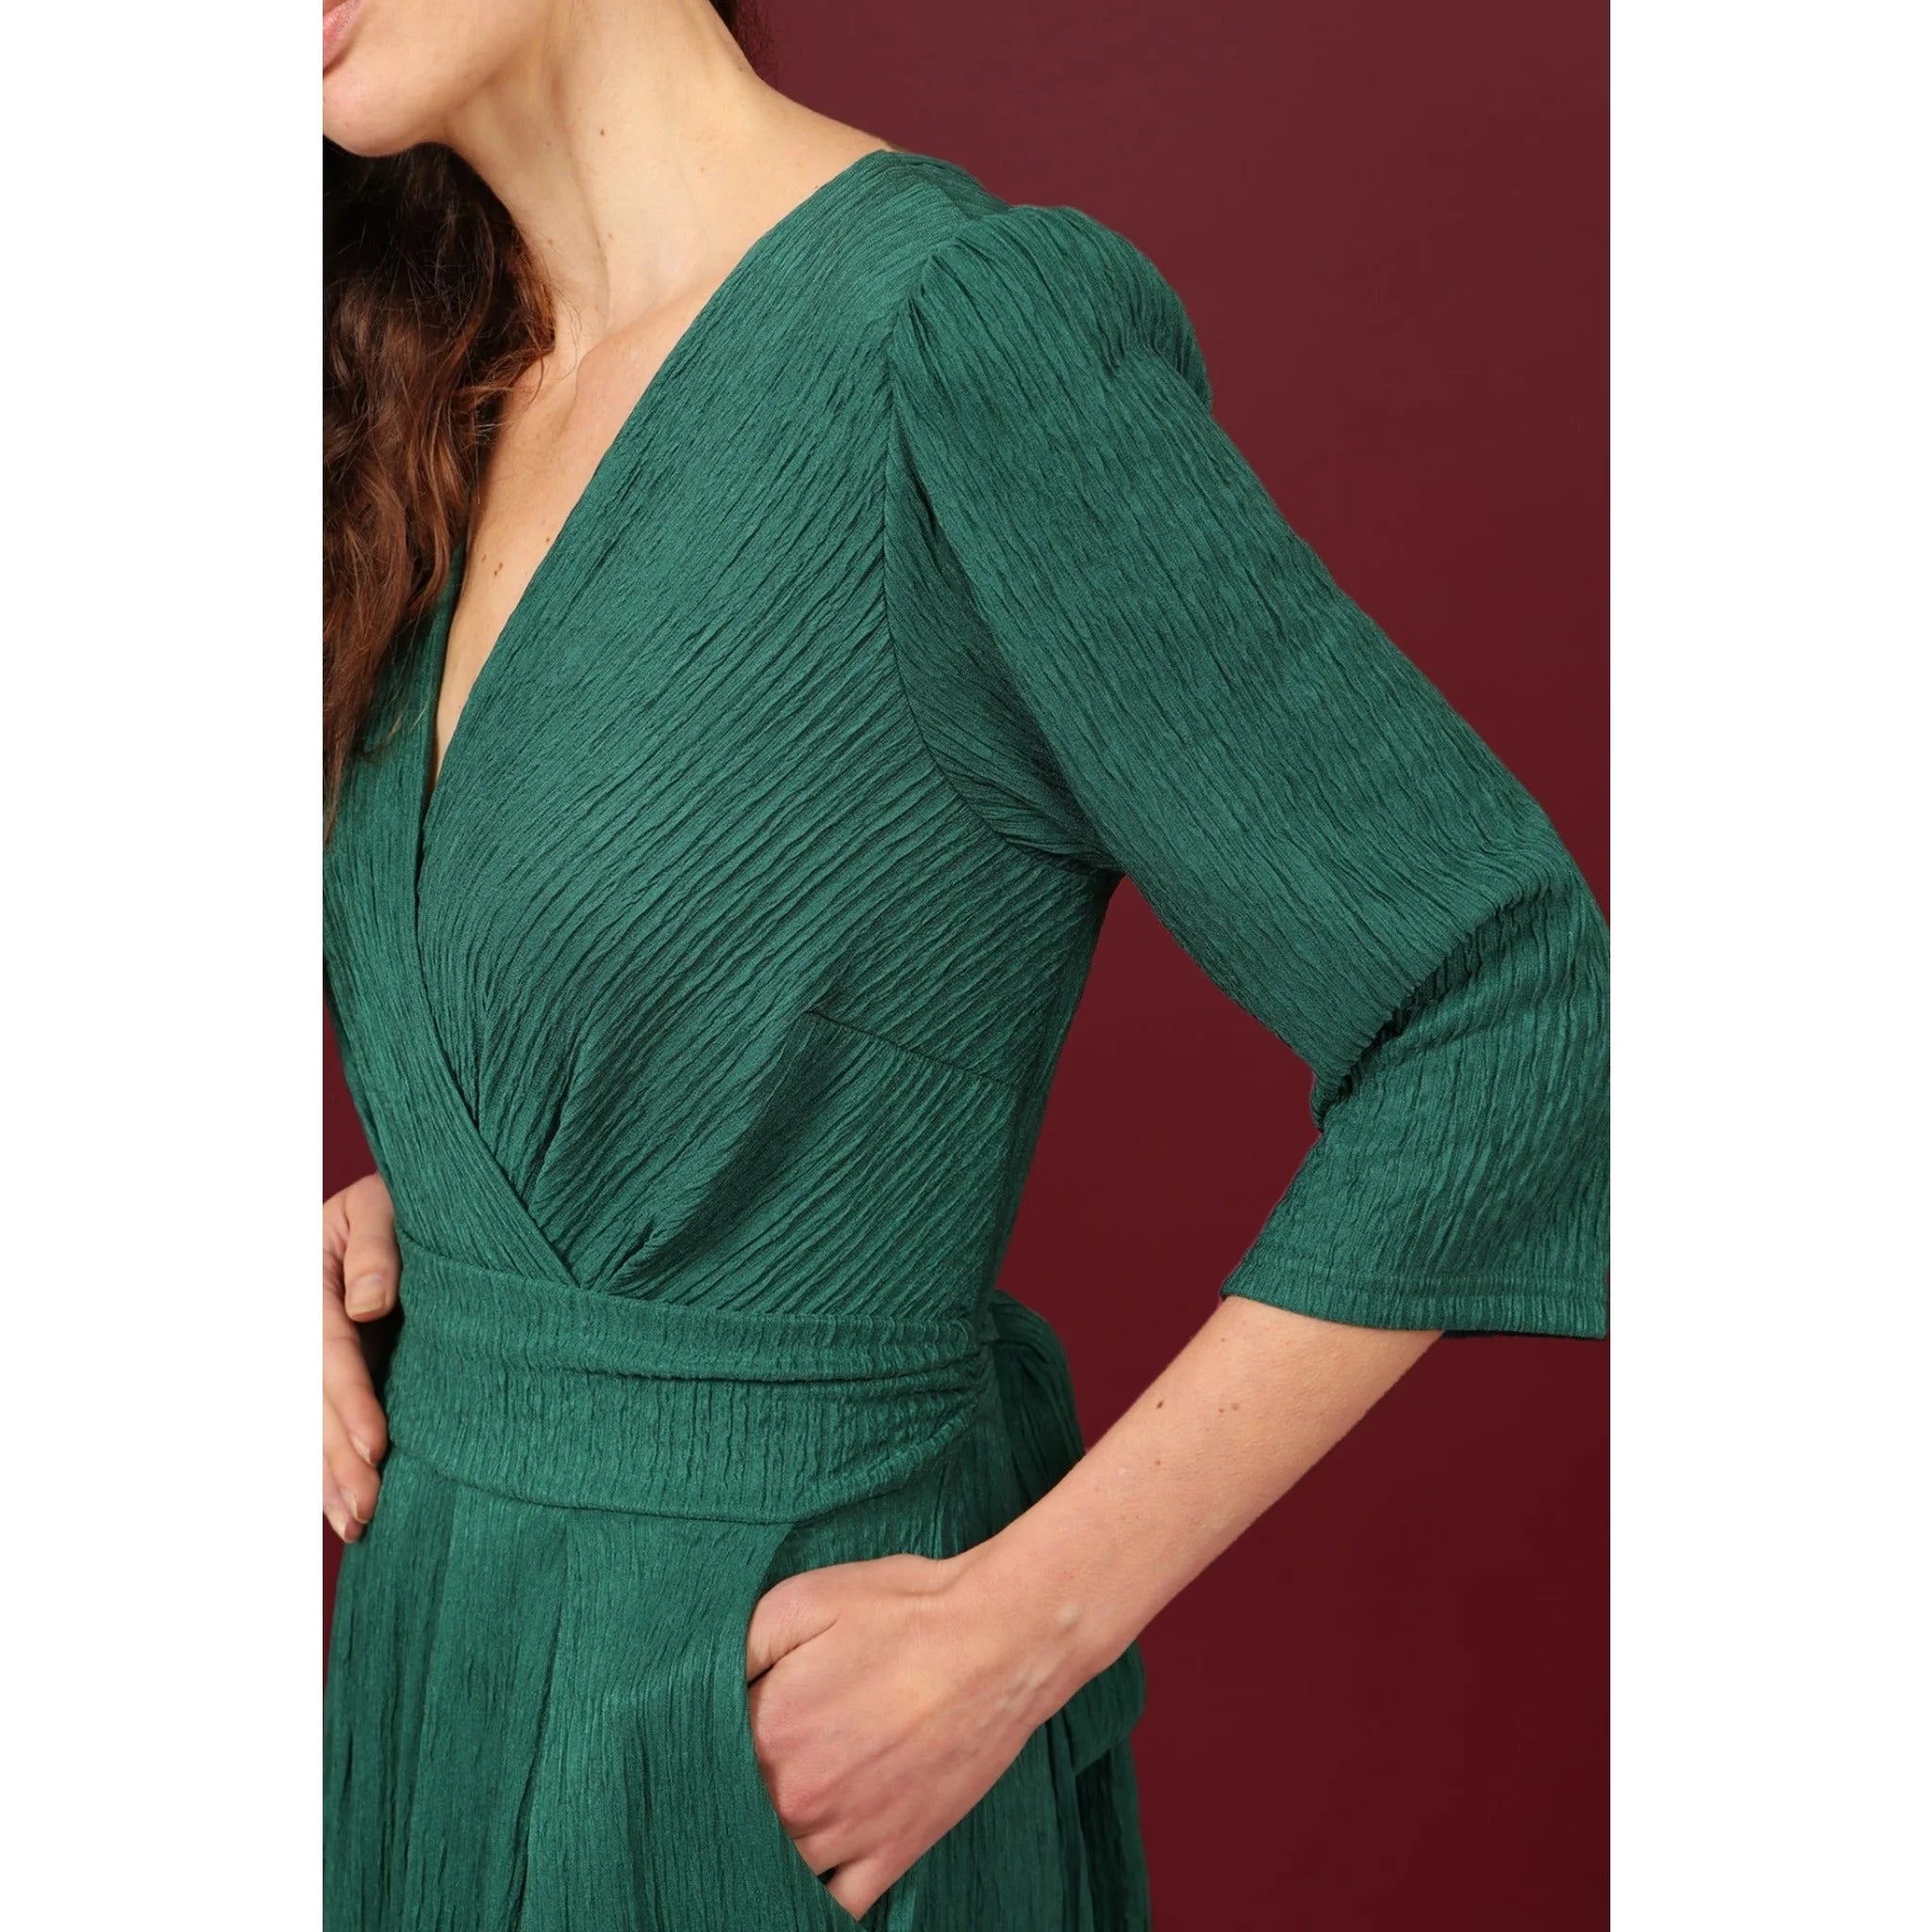 Textured Green Plain Culotte Jumpsuit